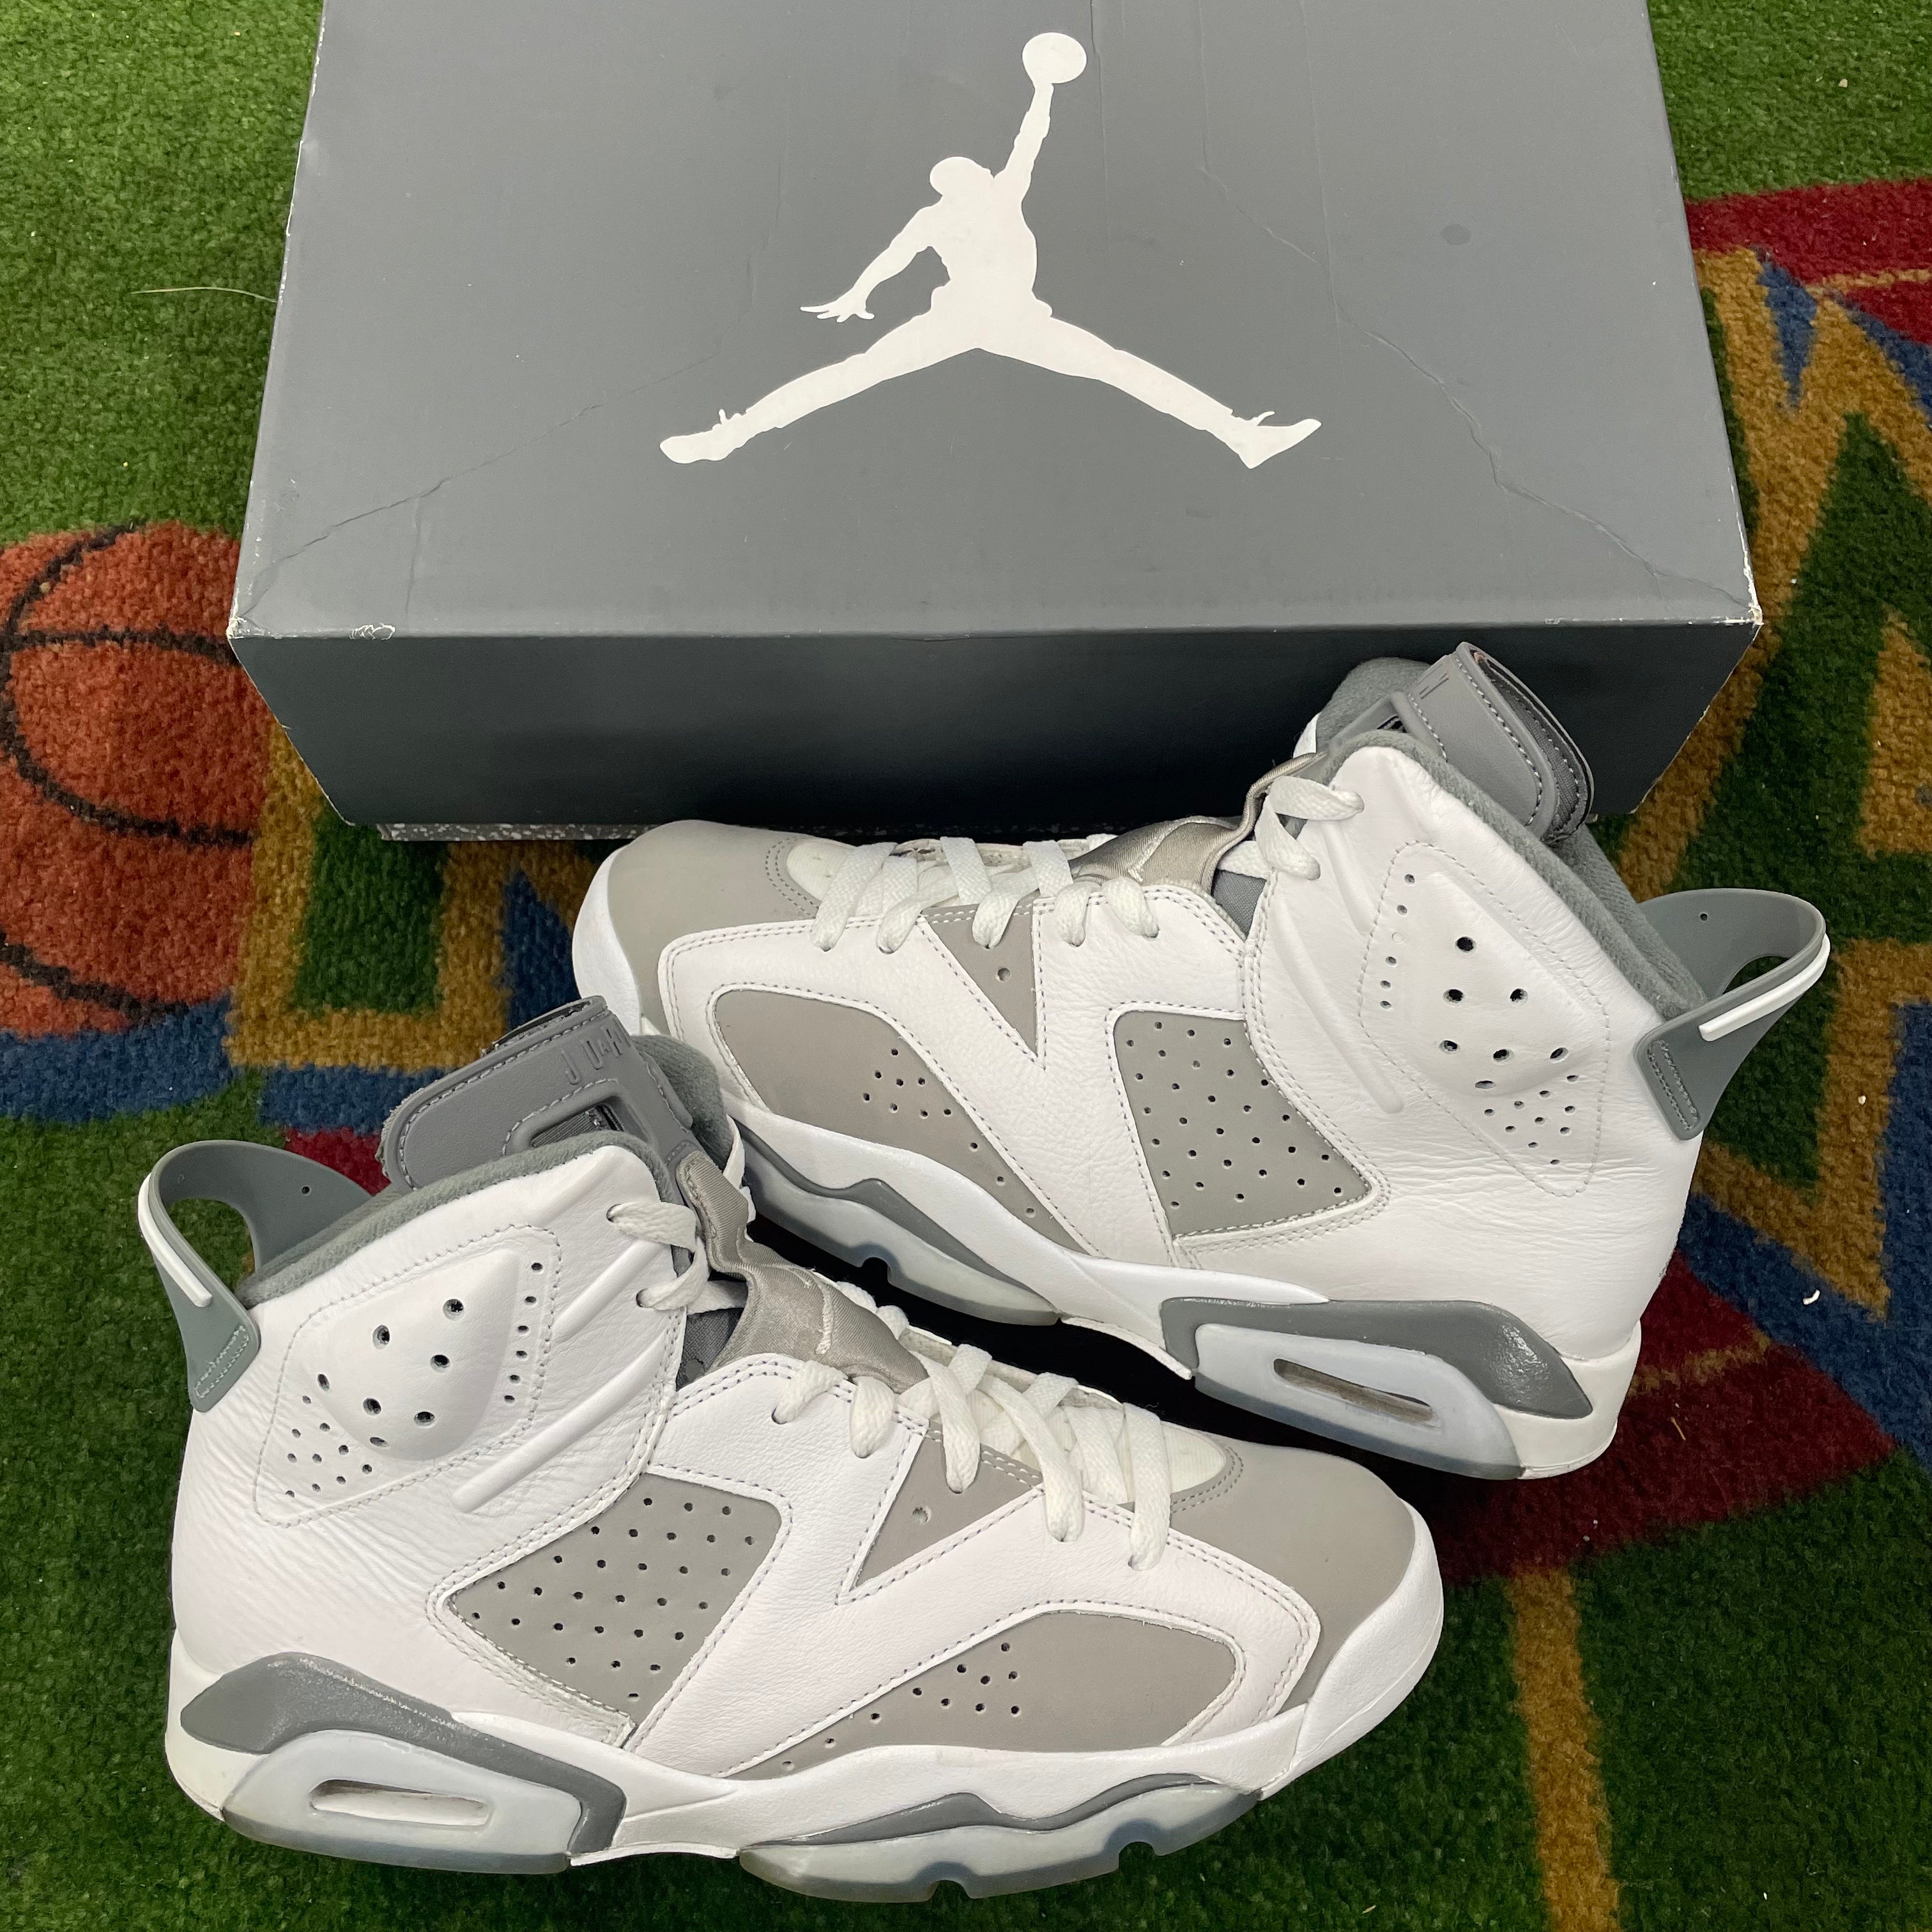 Jordan 6 “Cool Grey” Size 8.5